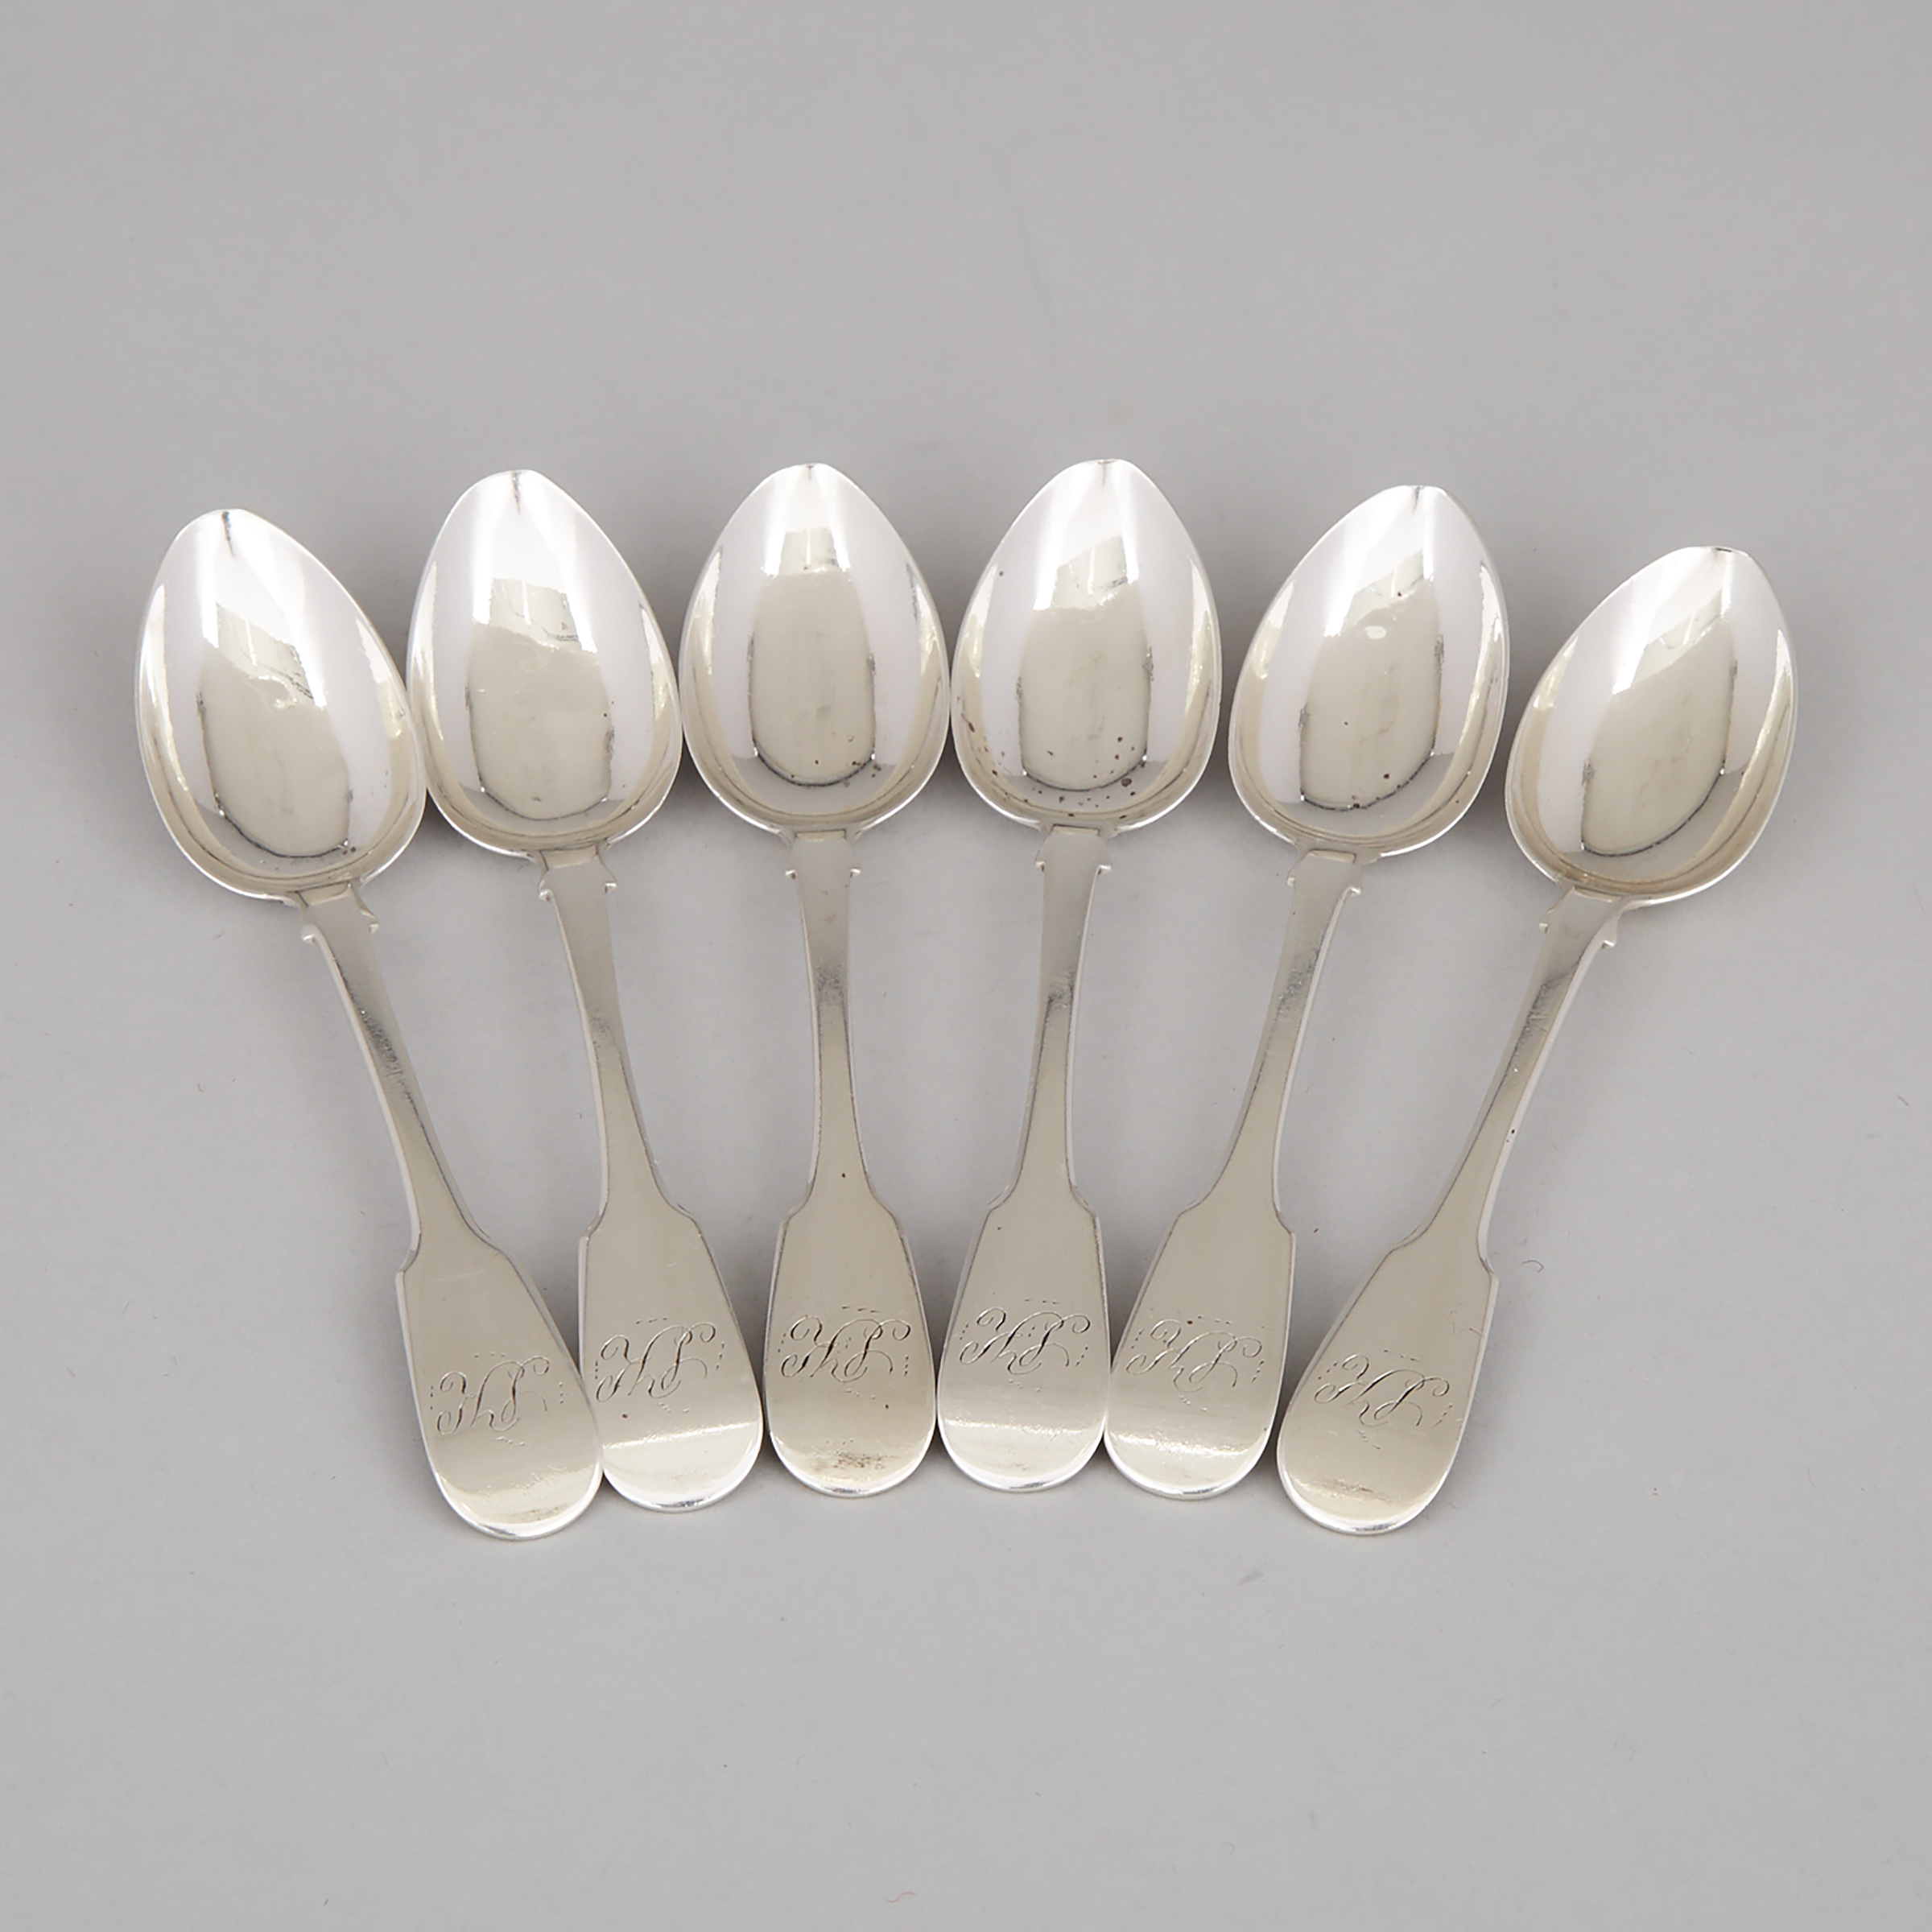 Six Canadian Fiddle Pattern Tea Spoons, Francois Sasseville, Quebec City, Que., mid-19th century